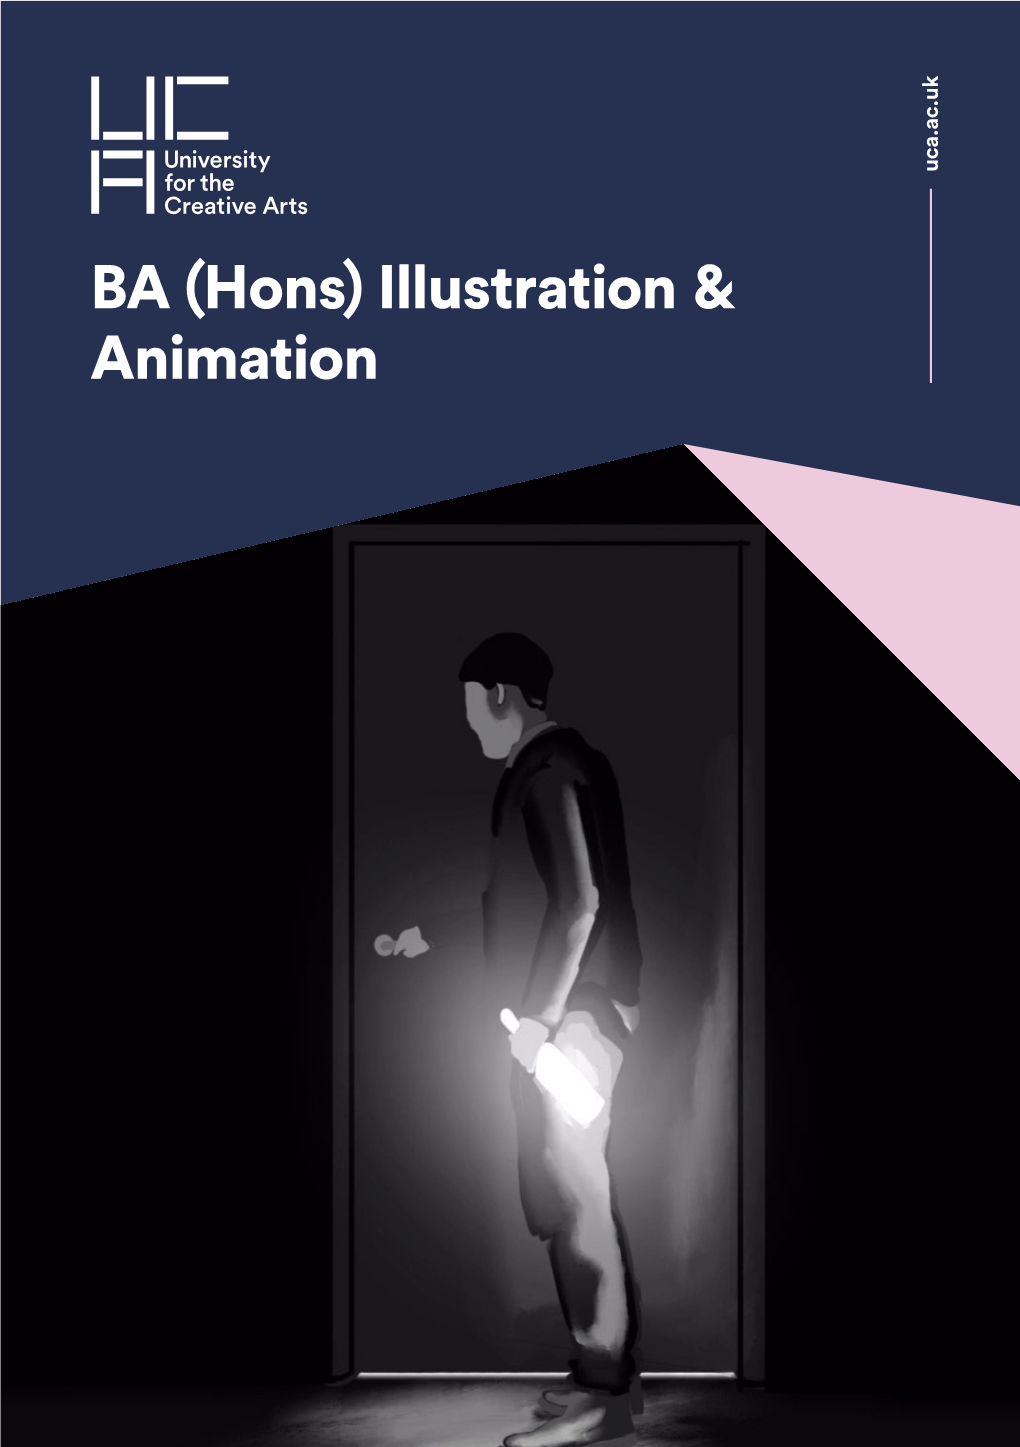 BA (Hons) Illustration & Animation